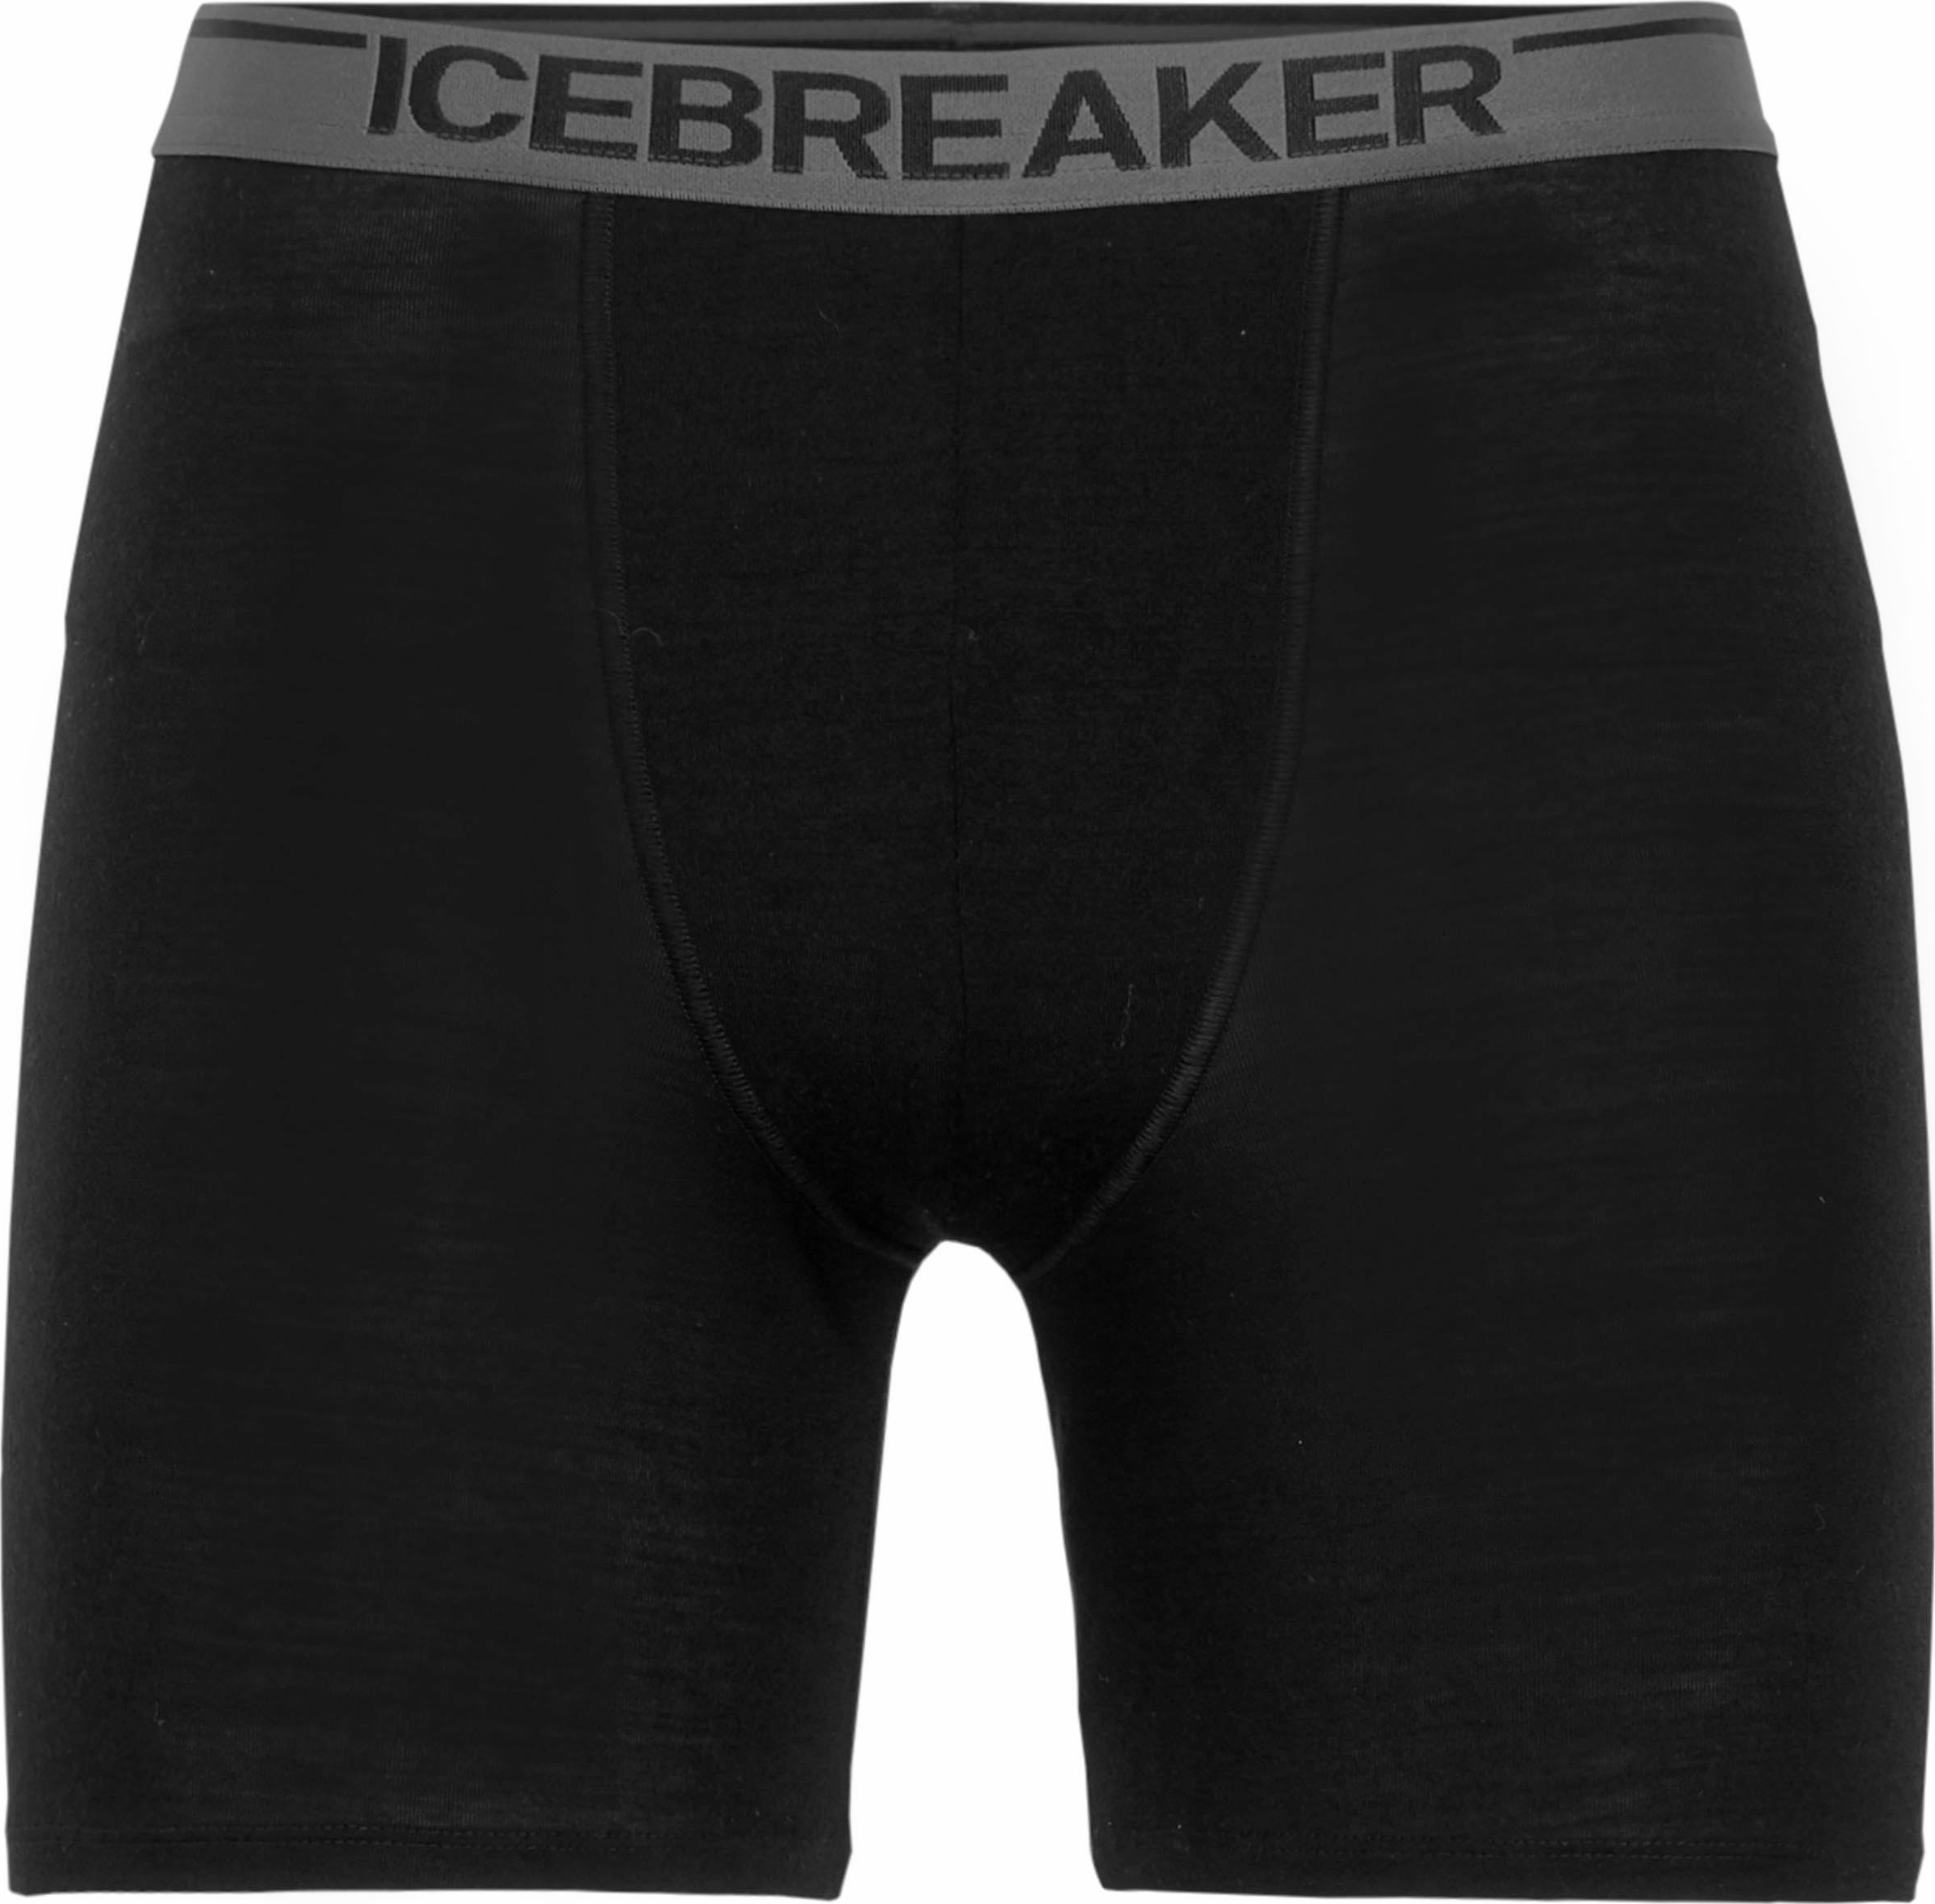 Icebreaker Men’s Anatomica Long Boxers Black